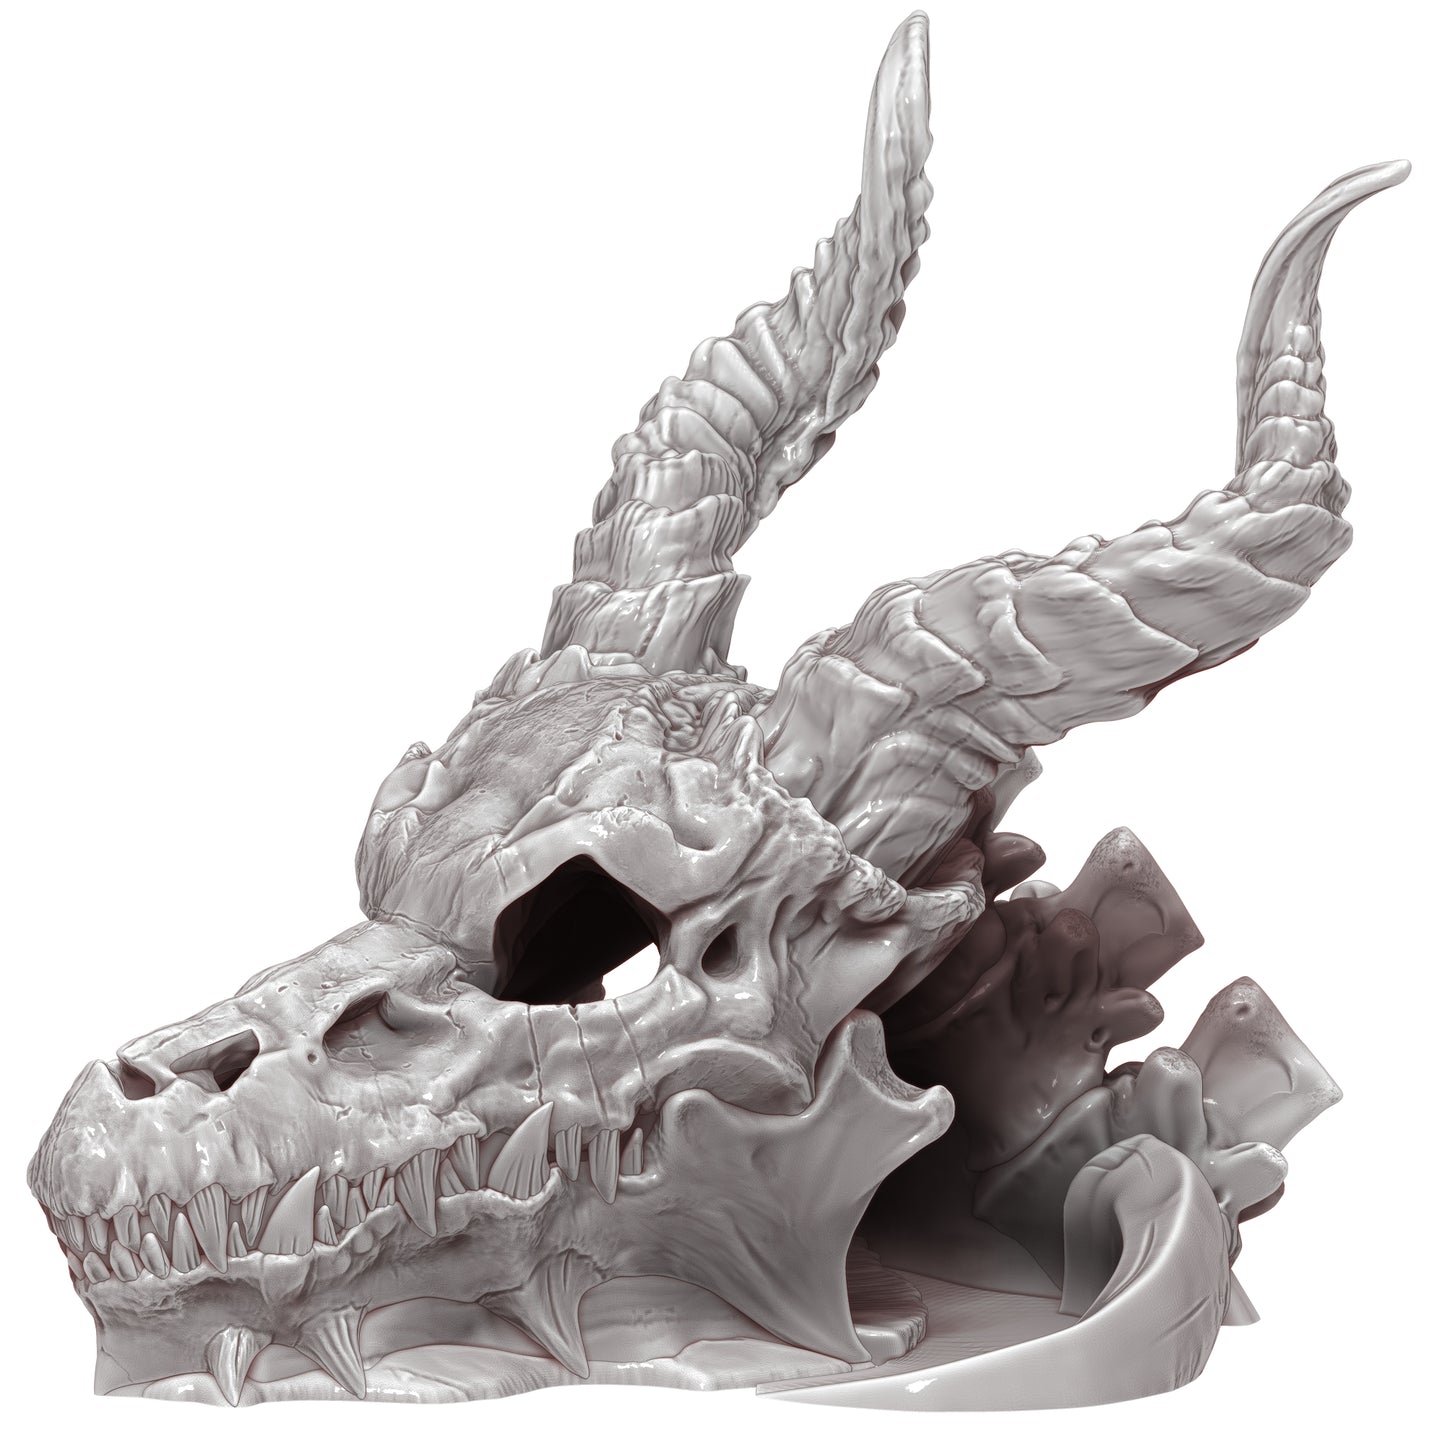 Dragon Skull Dice Tower / Terrain Piece with Horn Dice Storage Silk Basics